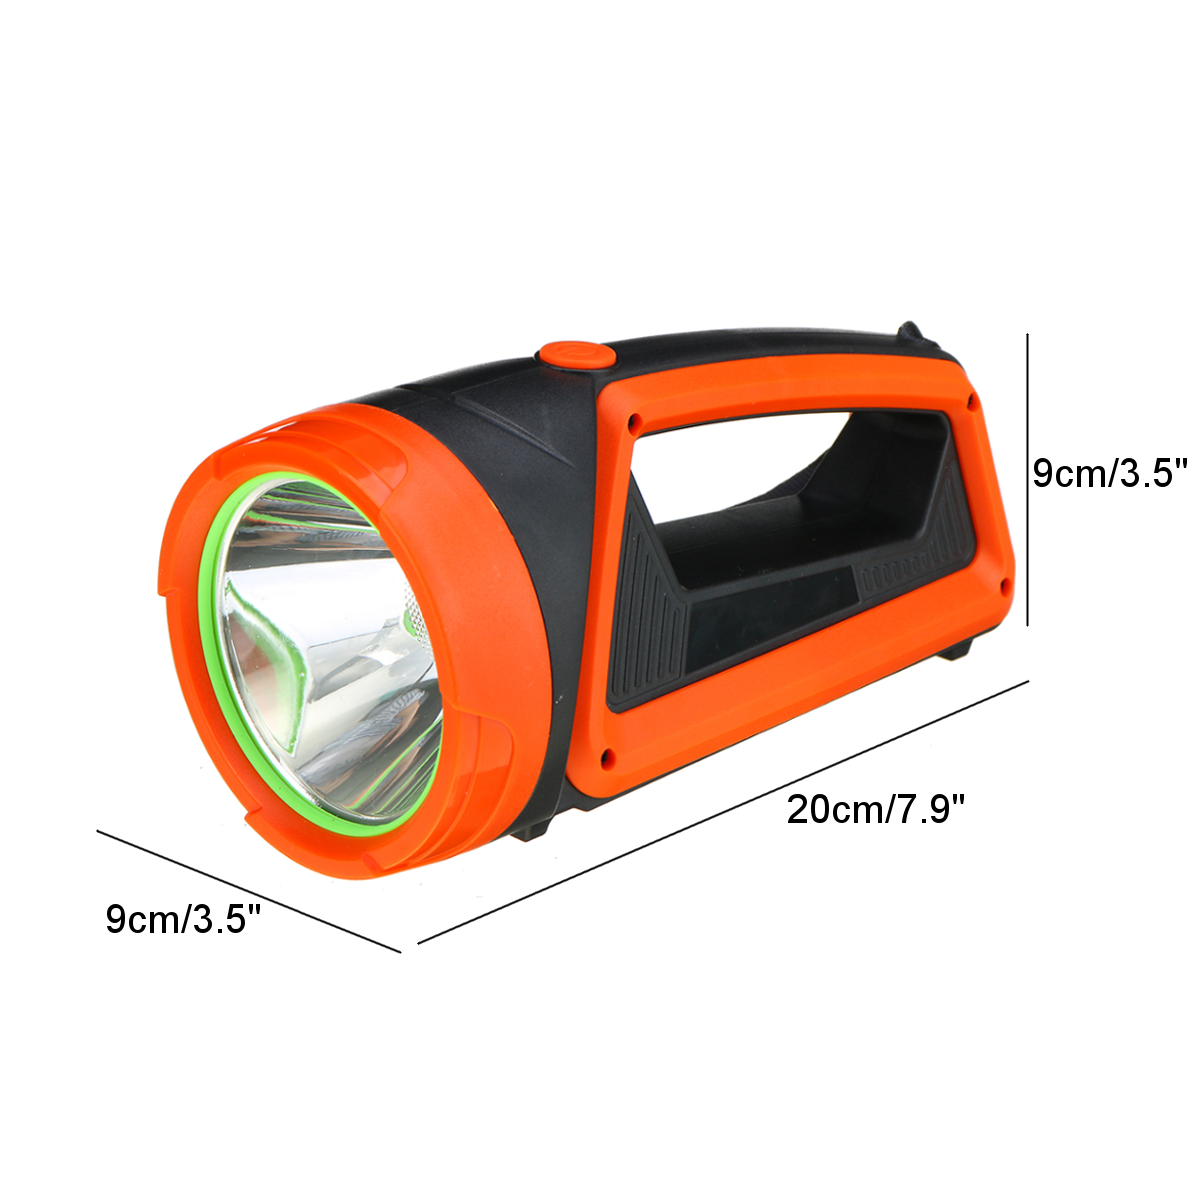 L2-LEDCOB-Searchlight-Super-Bright-7-Modes-USB-Rechargeable-Handheld-Flashlight-Camping-Fishing-1887927-2